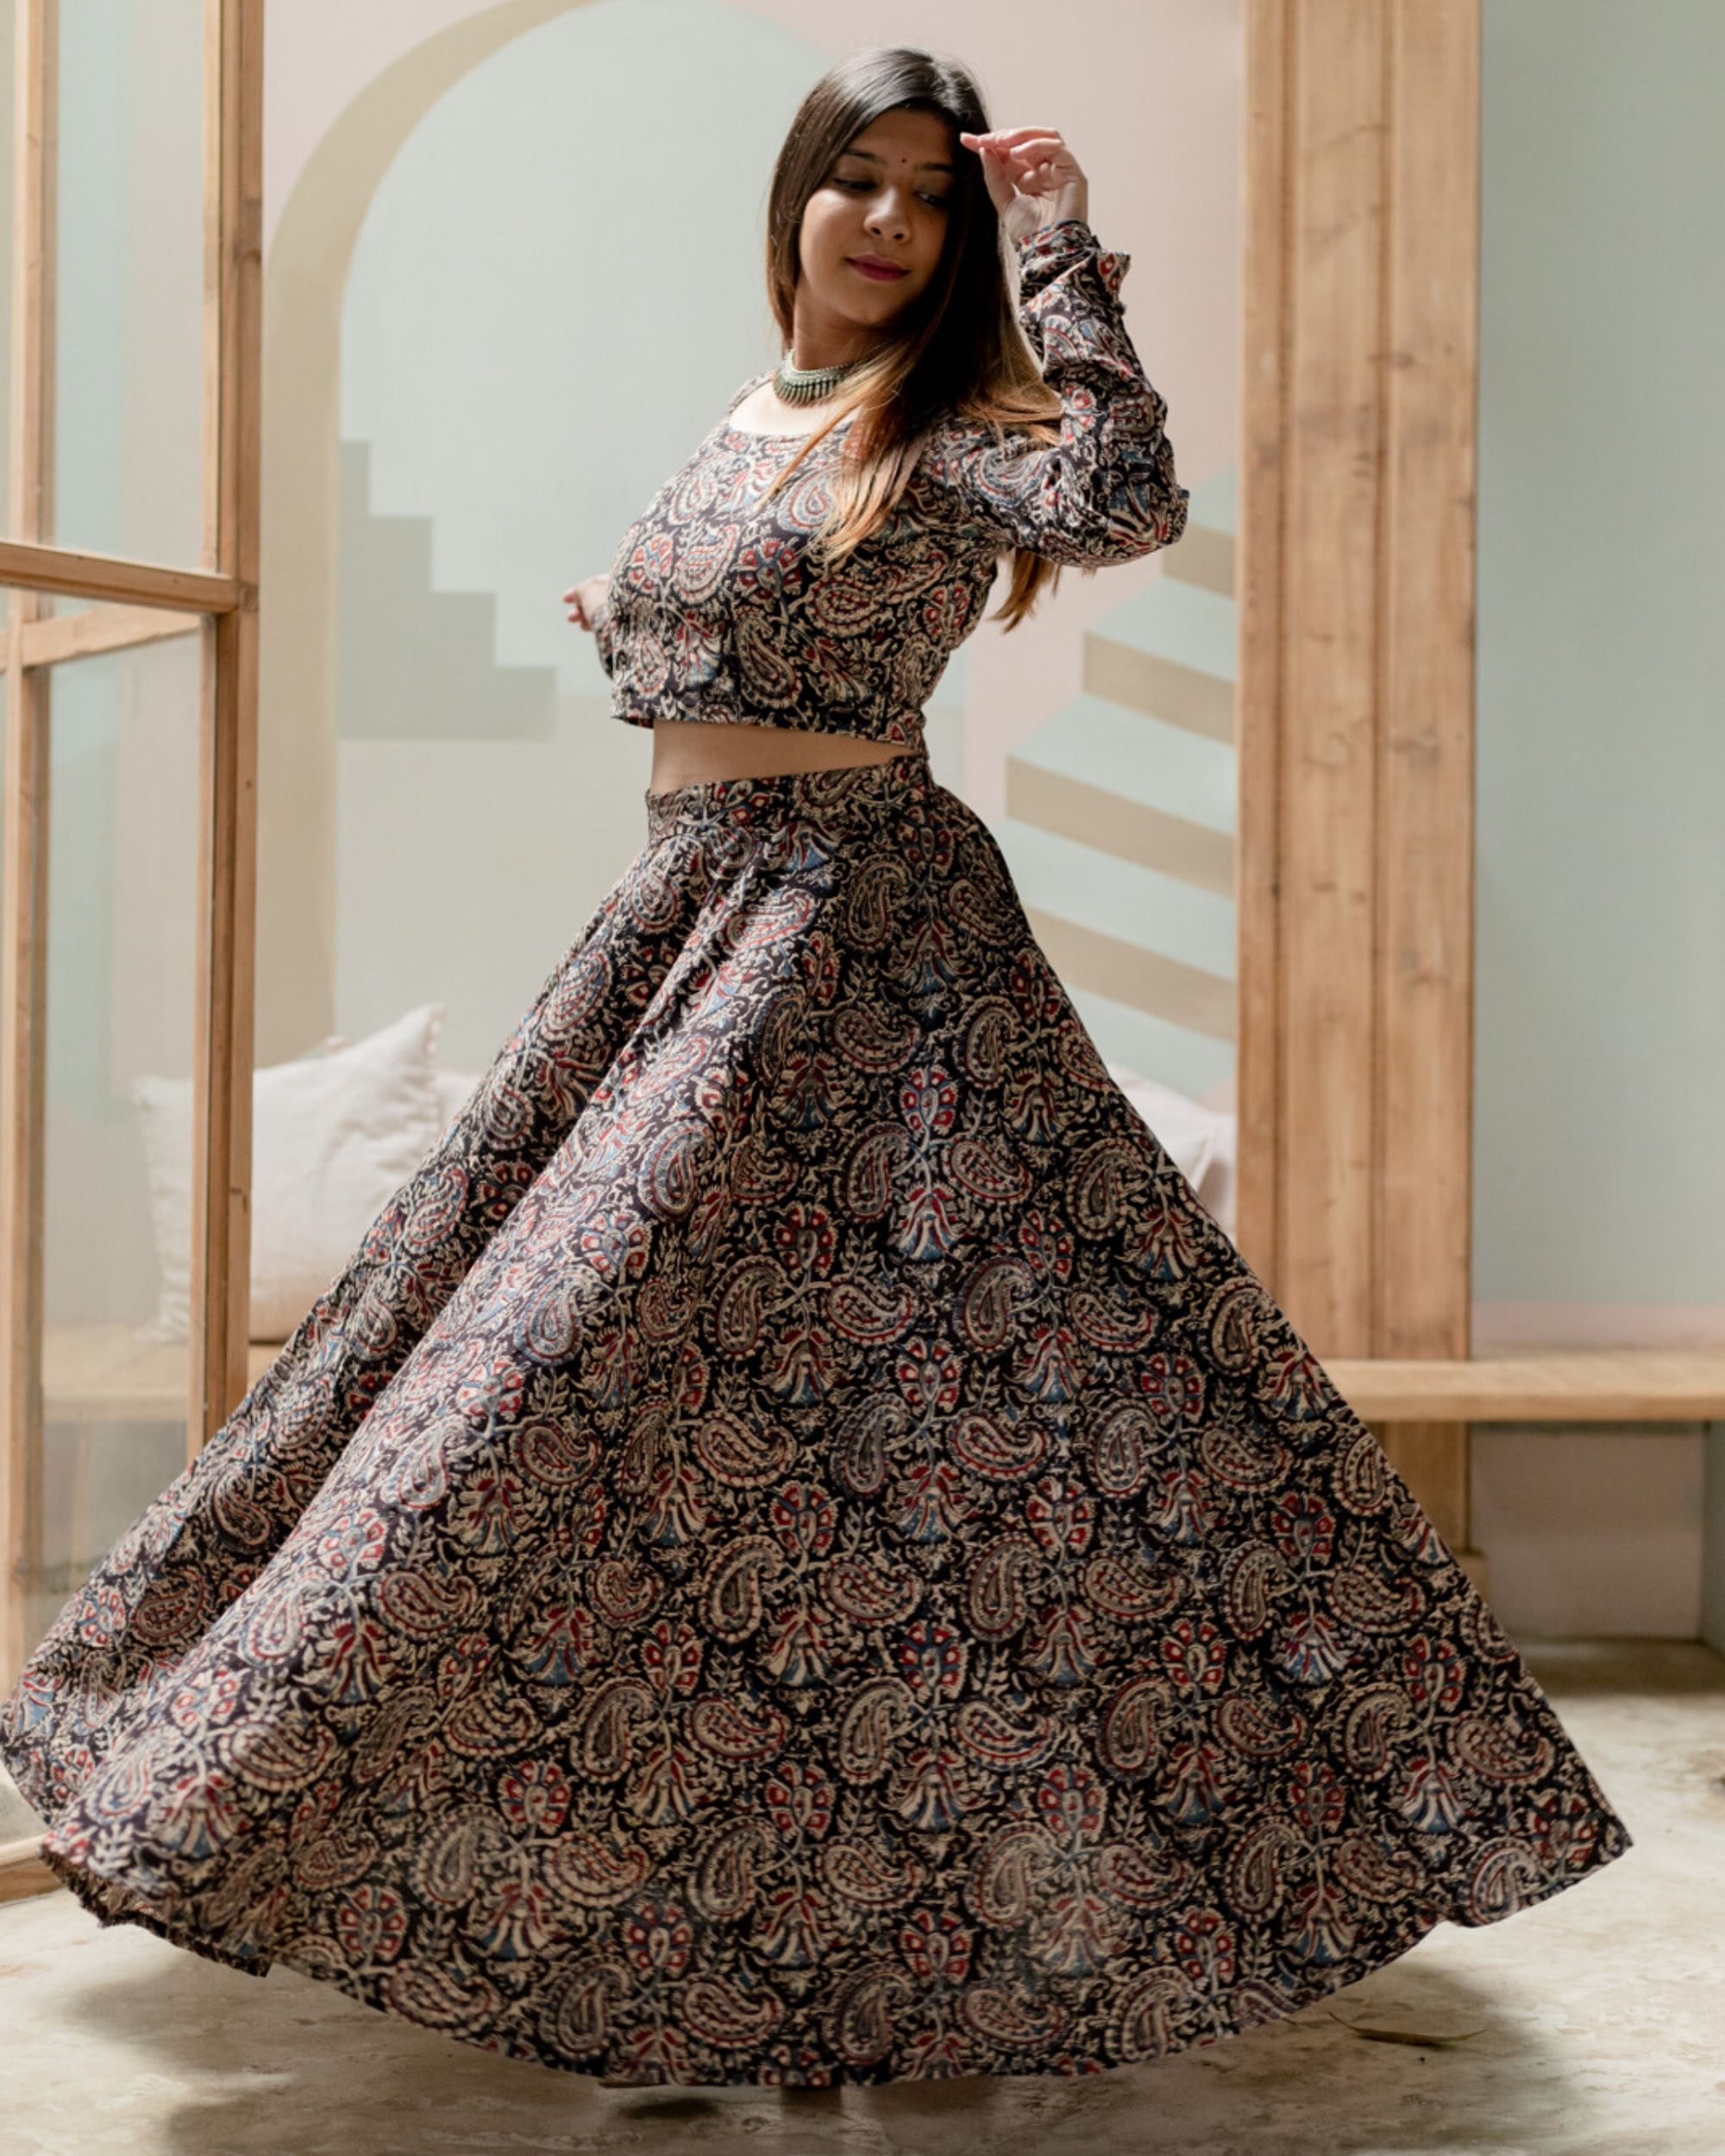 Nia Sharma VS Ashi Singh VS Mouni Roy: Whose Modern-day Dress Is Trend  Setter?